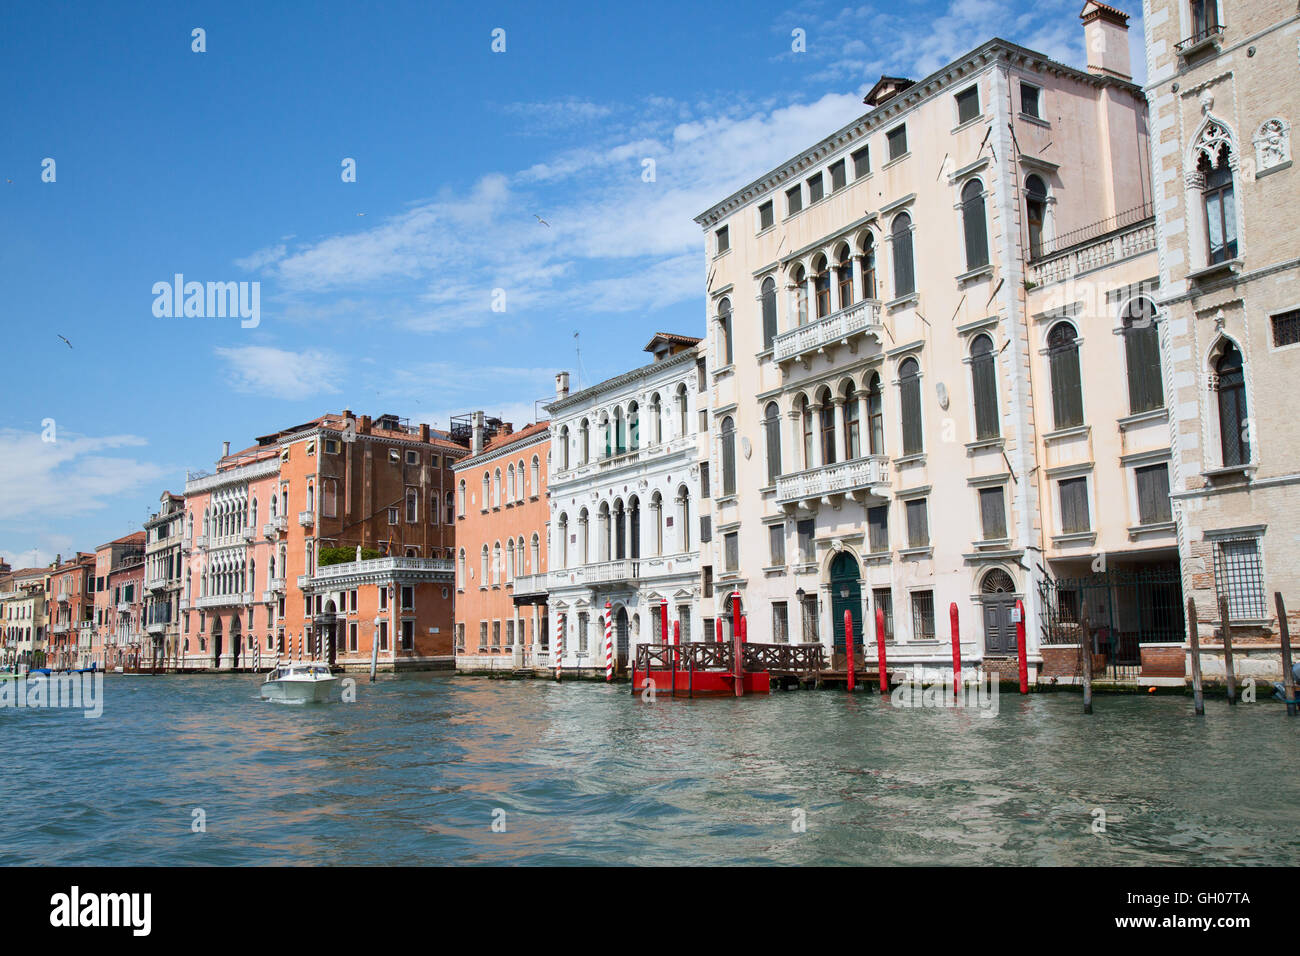 Streets of the ancient city Venice, Italy Stock Photo